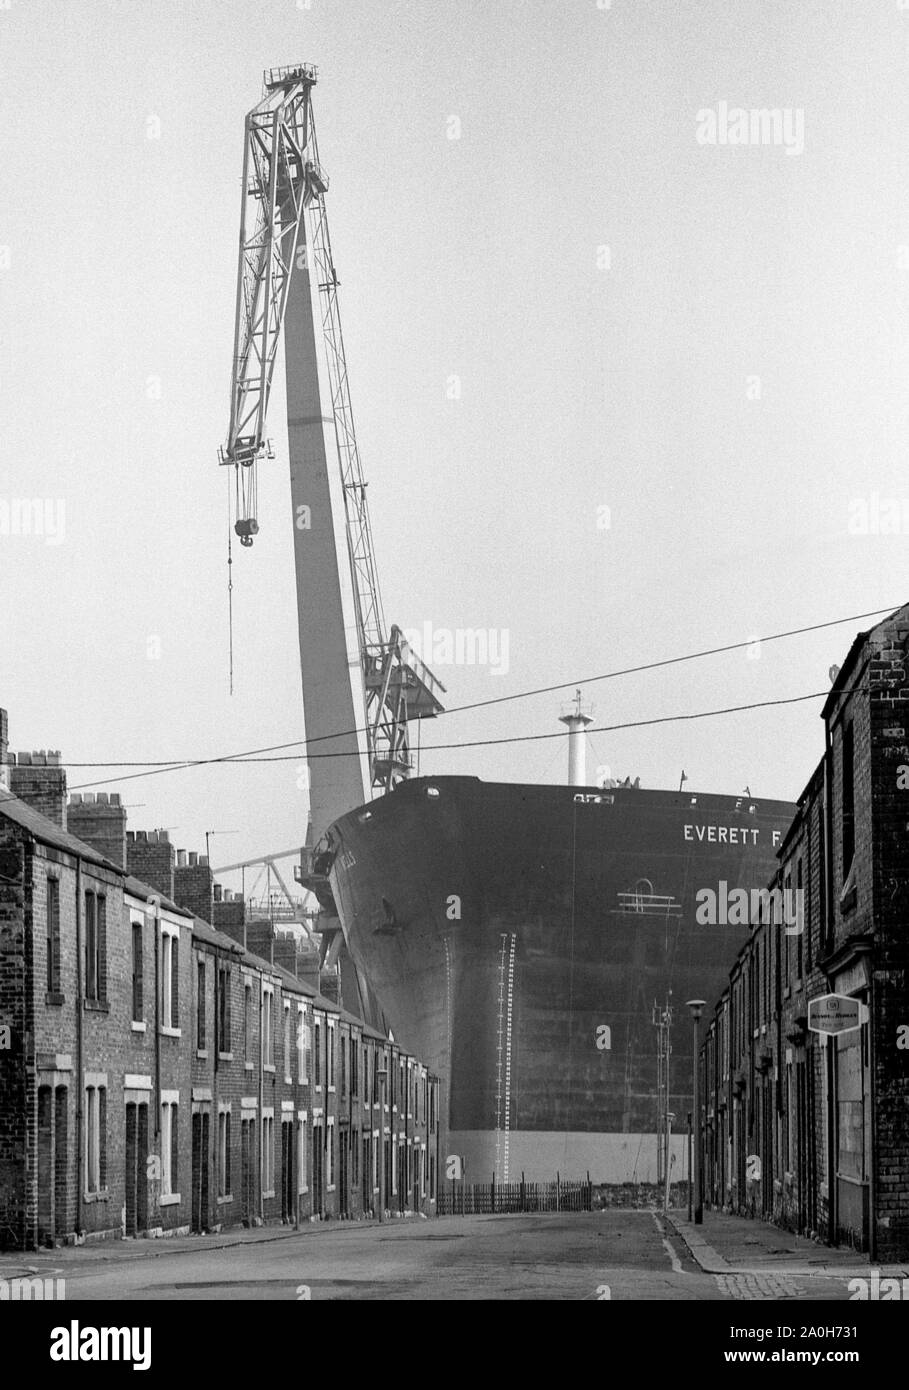 Tanker Everett F. Wells, Swan Hunter shipbuilders, Wallsend, UK, 1976 Stock Photo